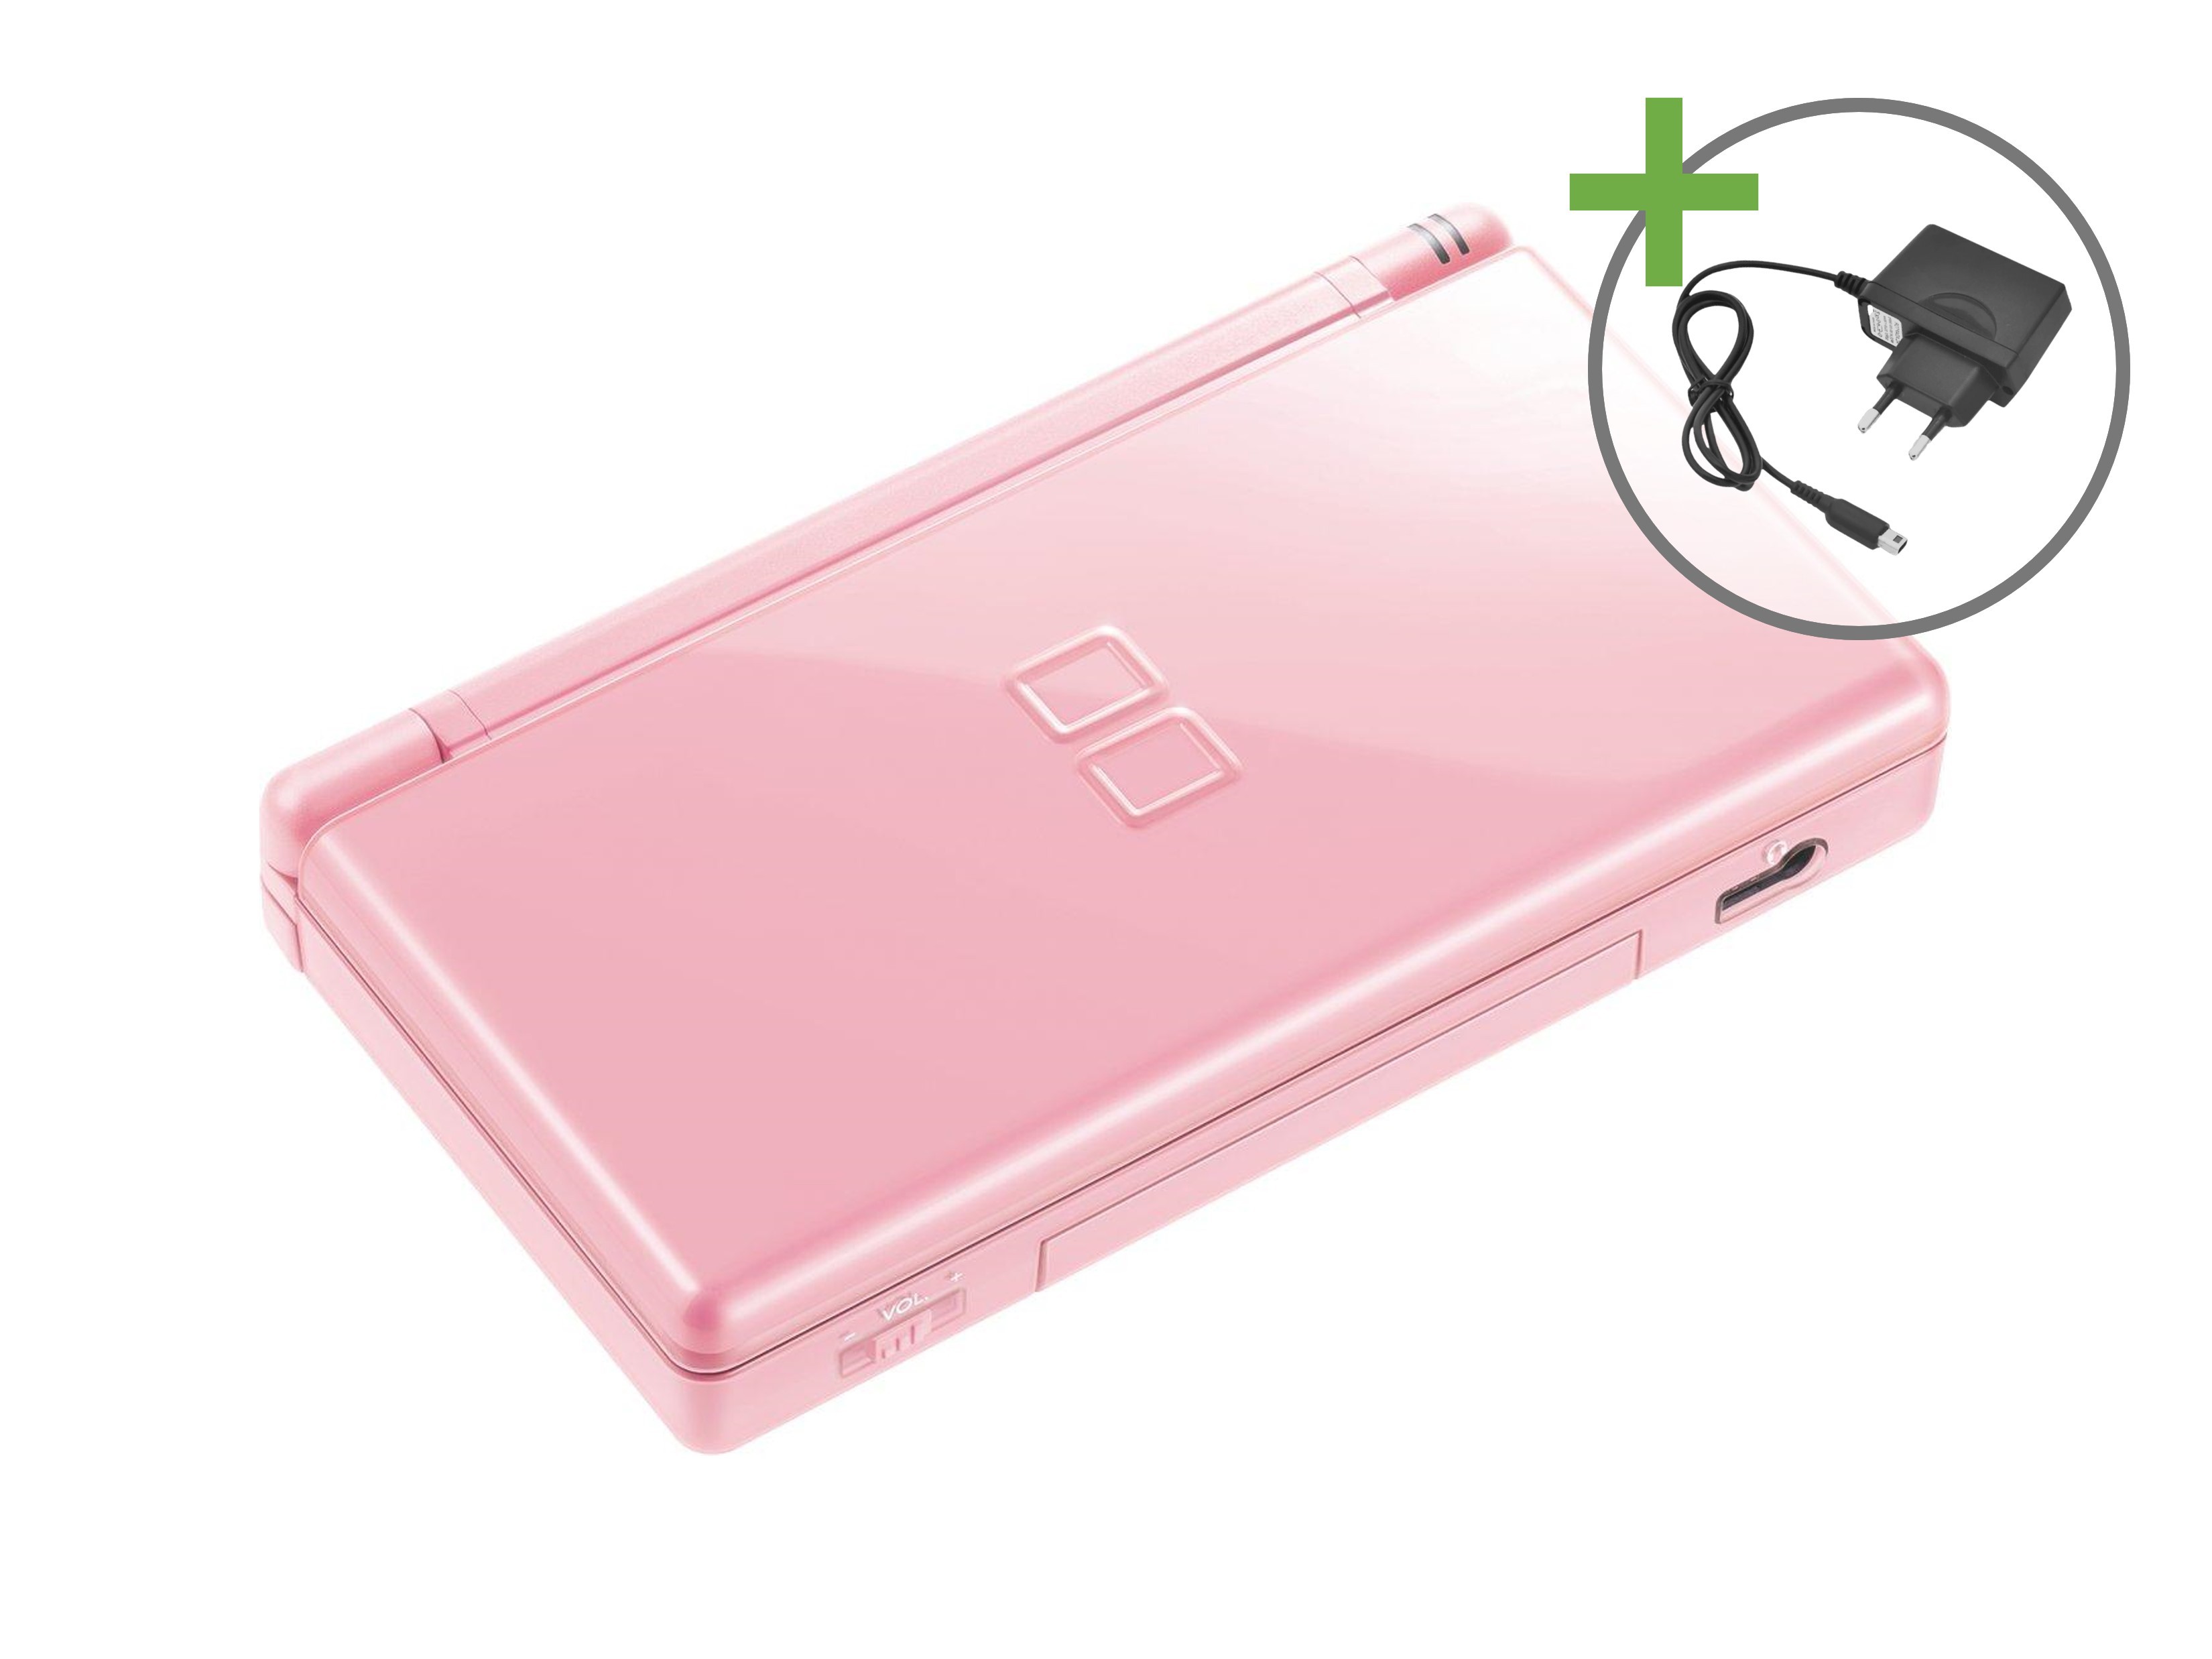 Nintendo DS Lite Pink - Nintendo DS Hardware - 2